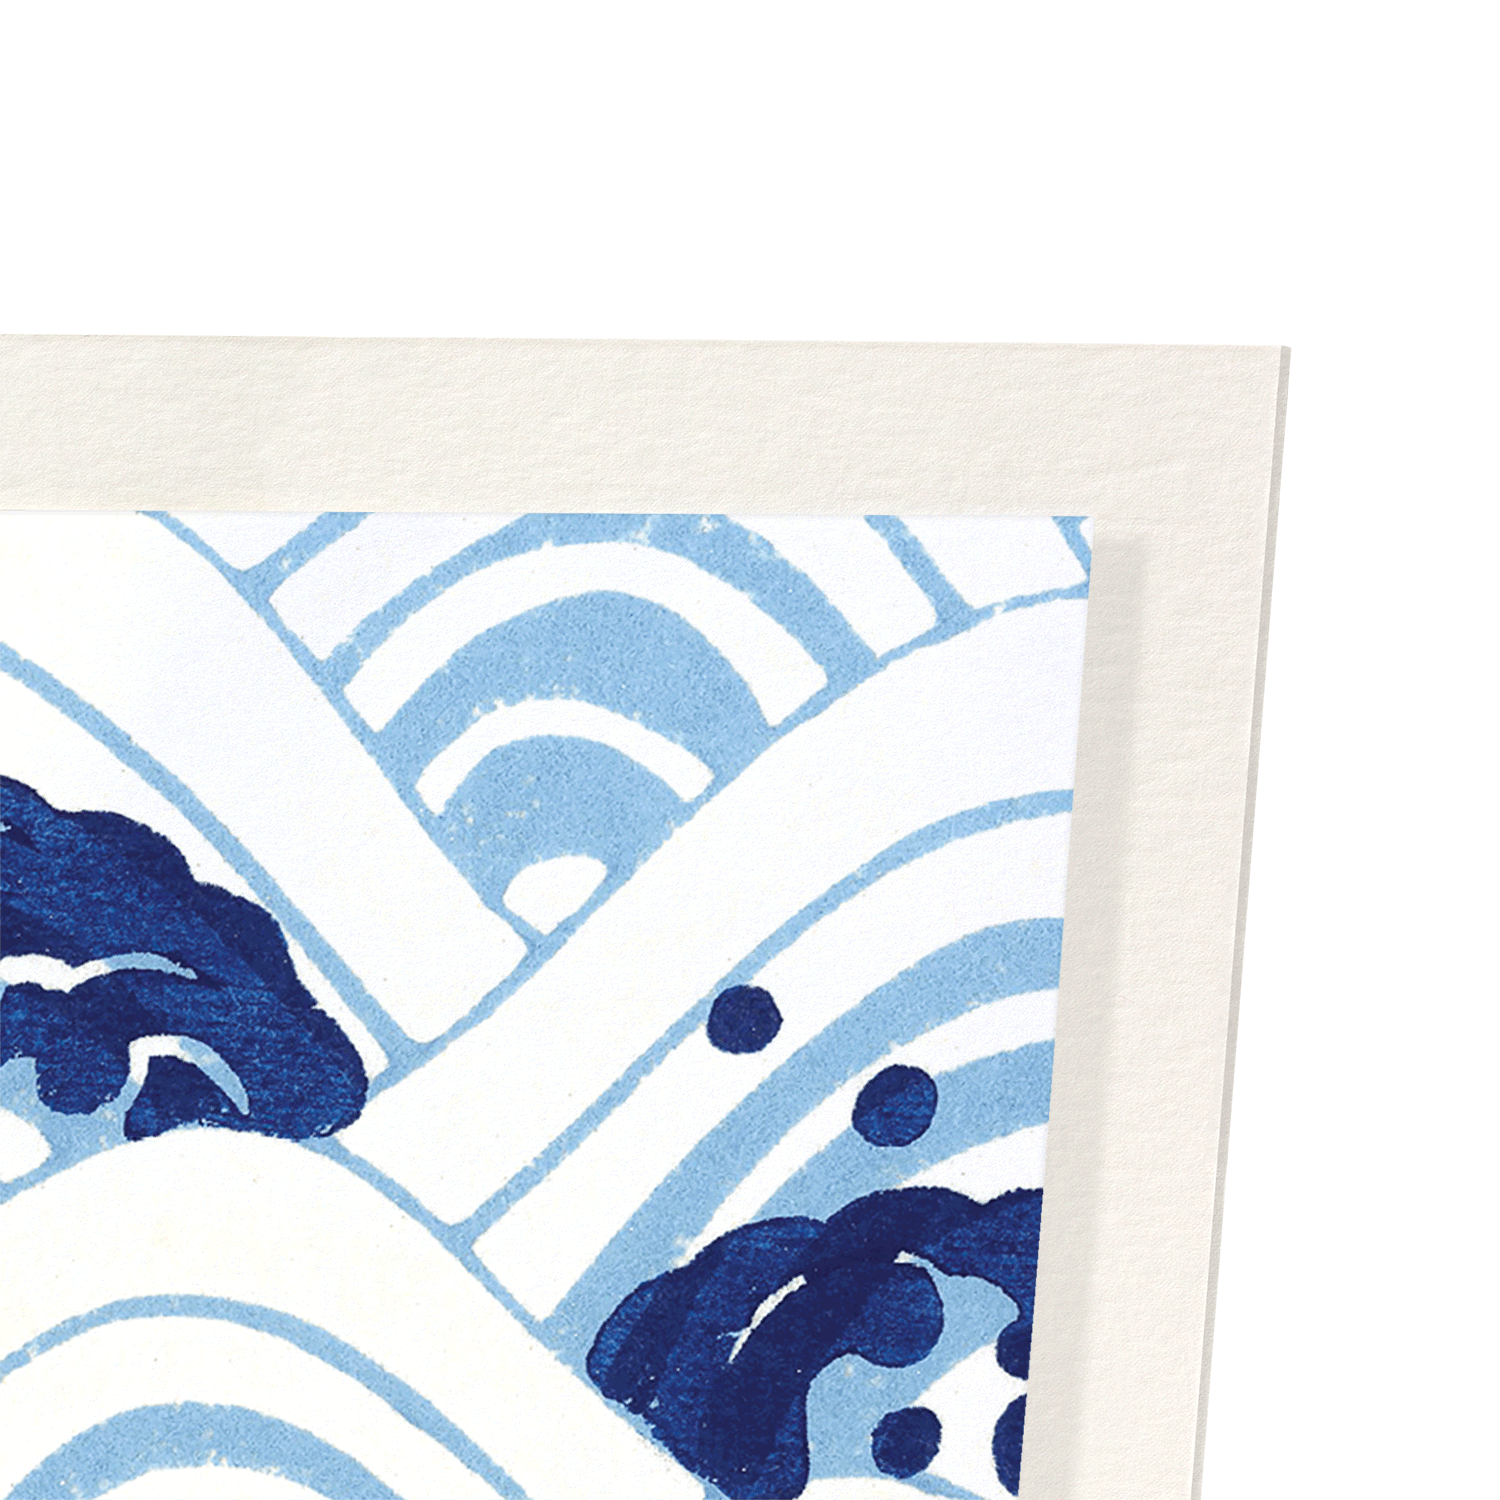 SEA OF WAVES: Japanese Art Print